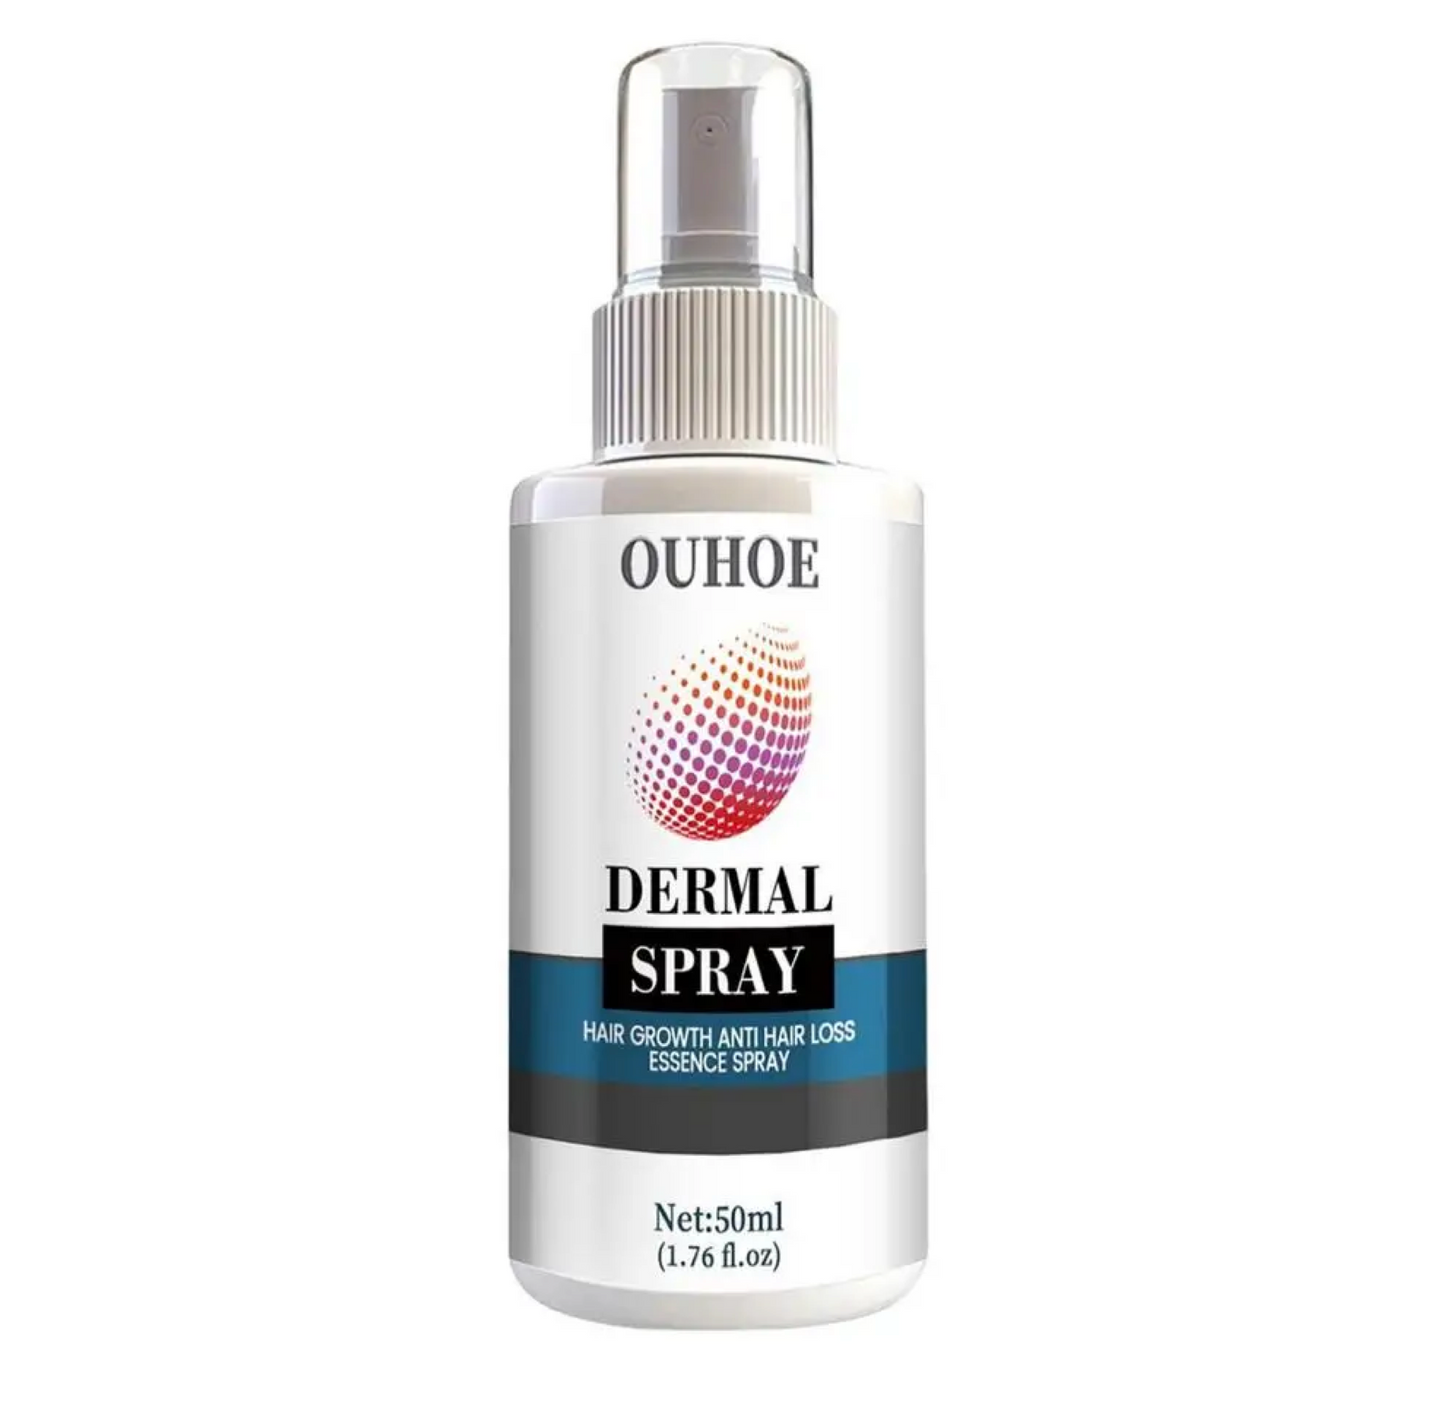 Ouhoe Dermal Hair Growth Essence Spray 50ml